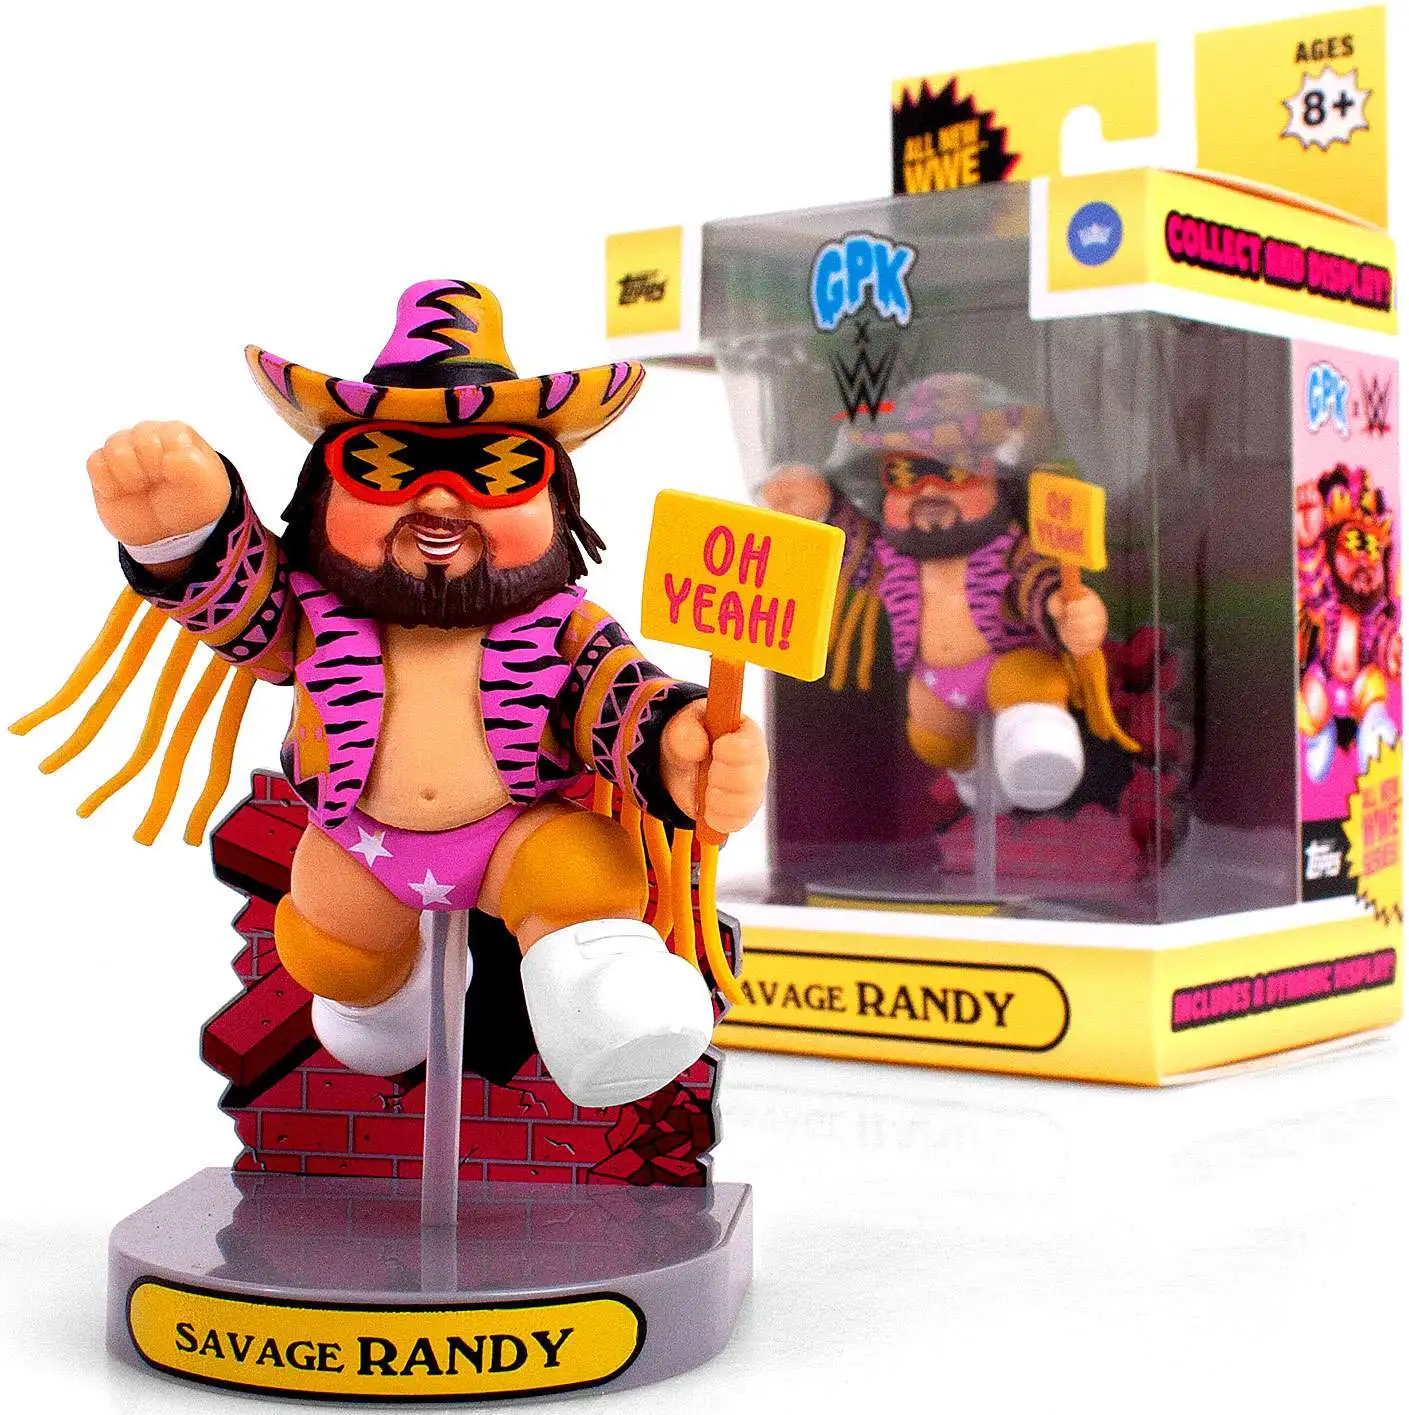 Garbage Pail Kids Topps GPK x WWE Savage Randy Exclusive Figurine